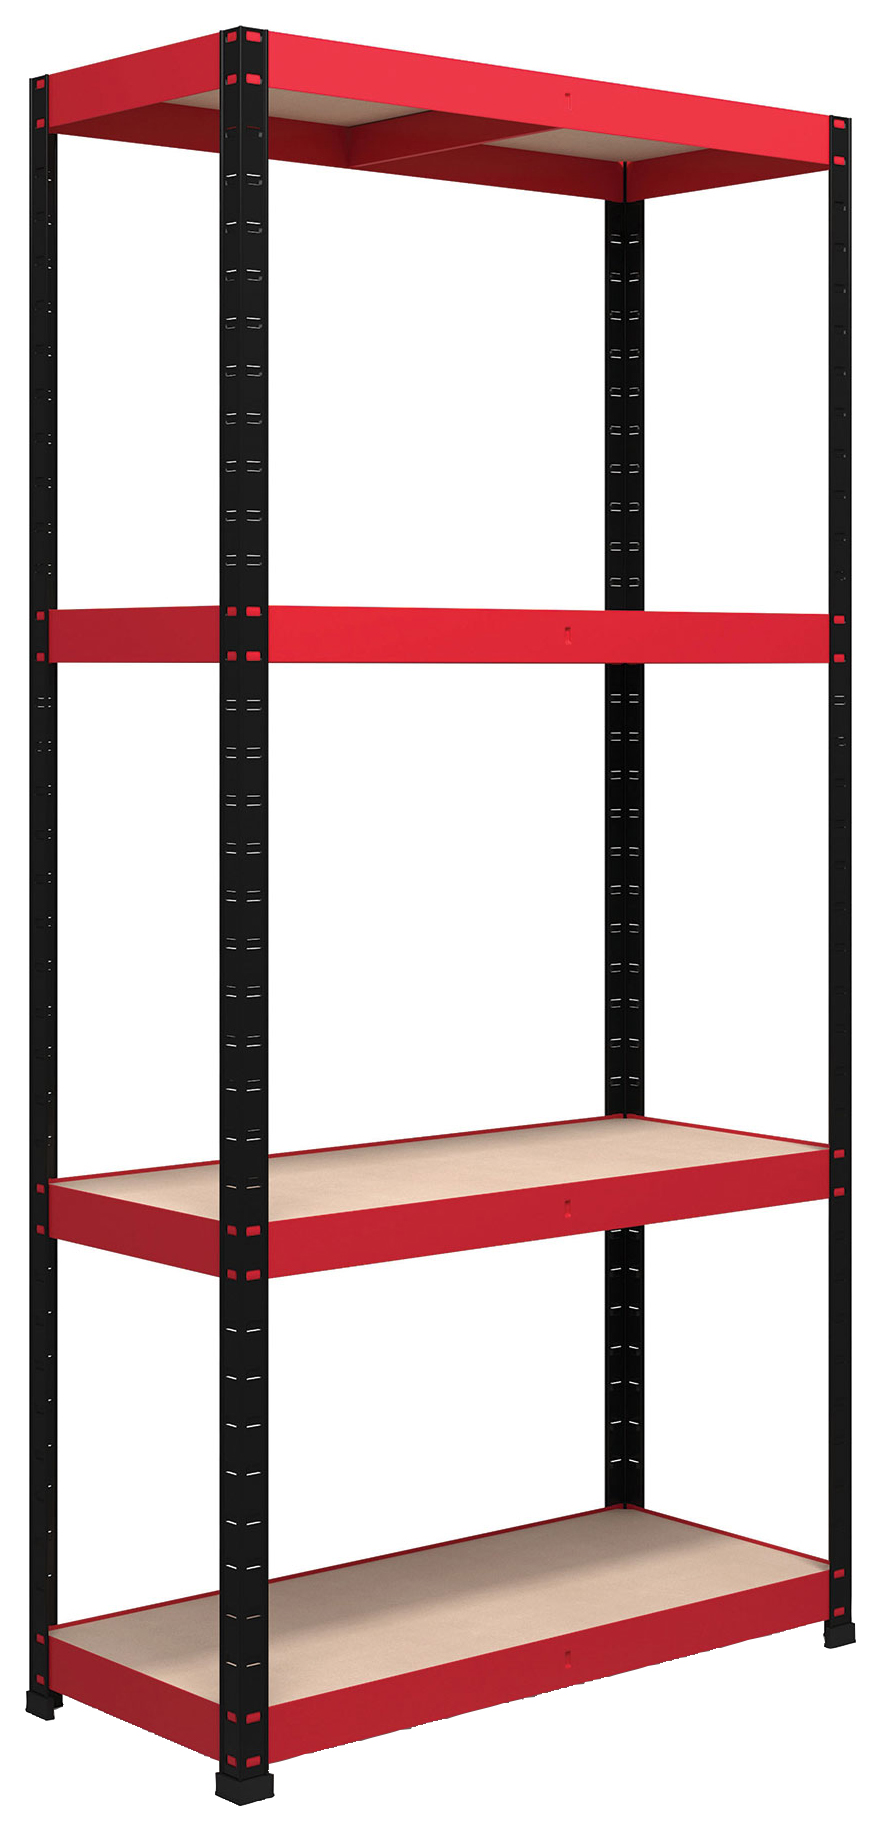 Rb Boss Shelf Kit 4 Wood Shelves - 1800 x 900 x 300mm 500kg Udl